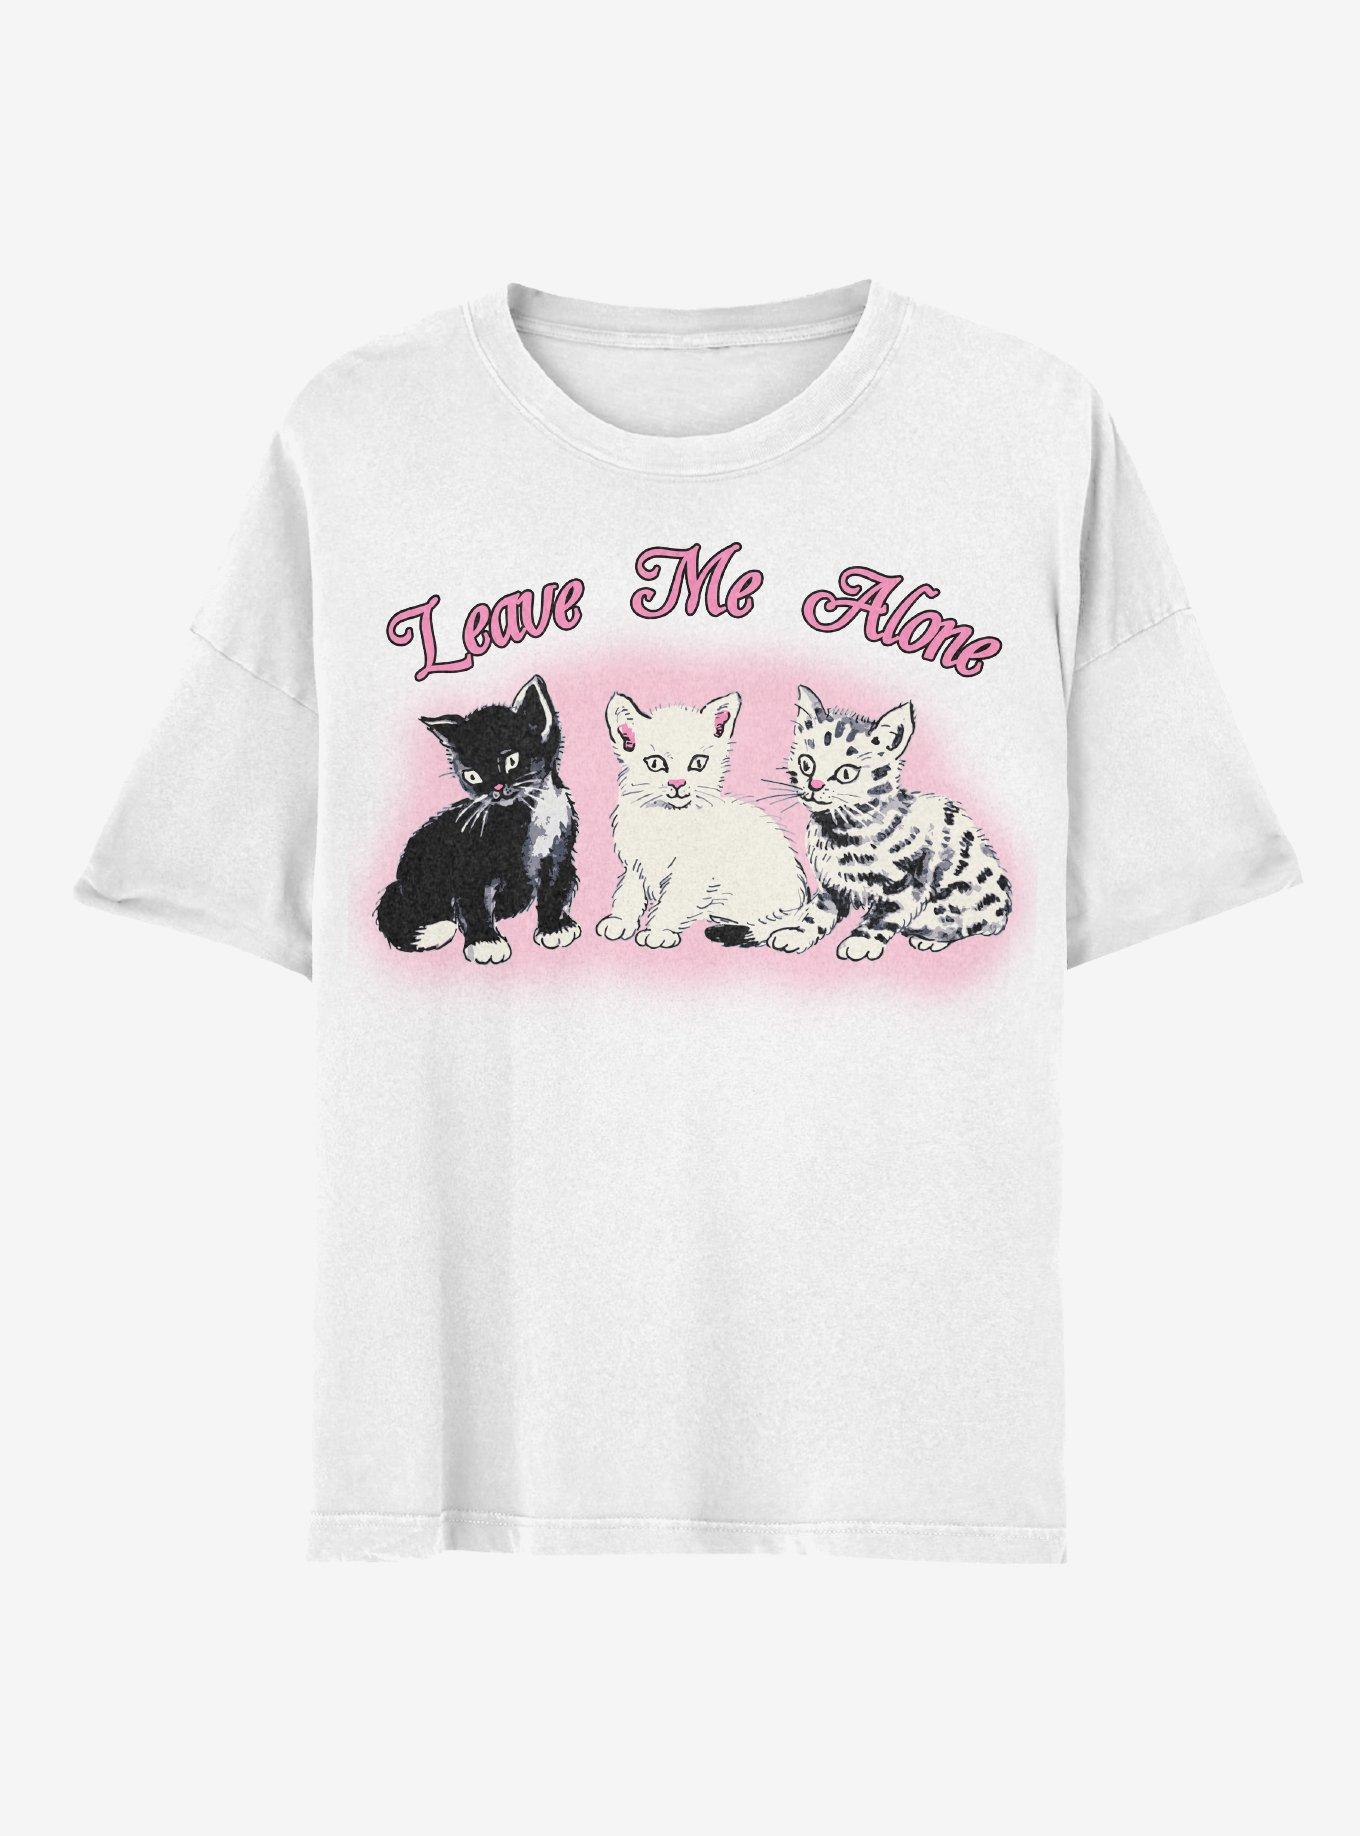 Leave Me Alone Cat Trio Boyfriend Fit Girls T-Shirt, MULTI, hi-res